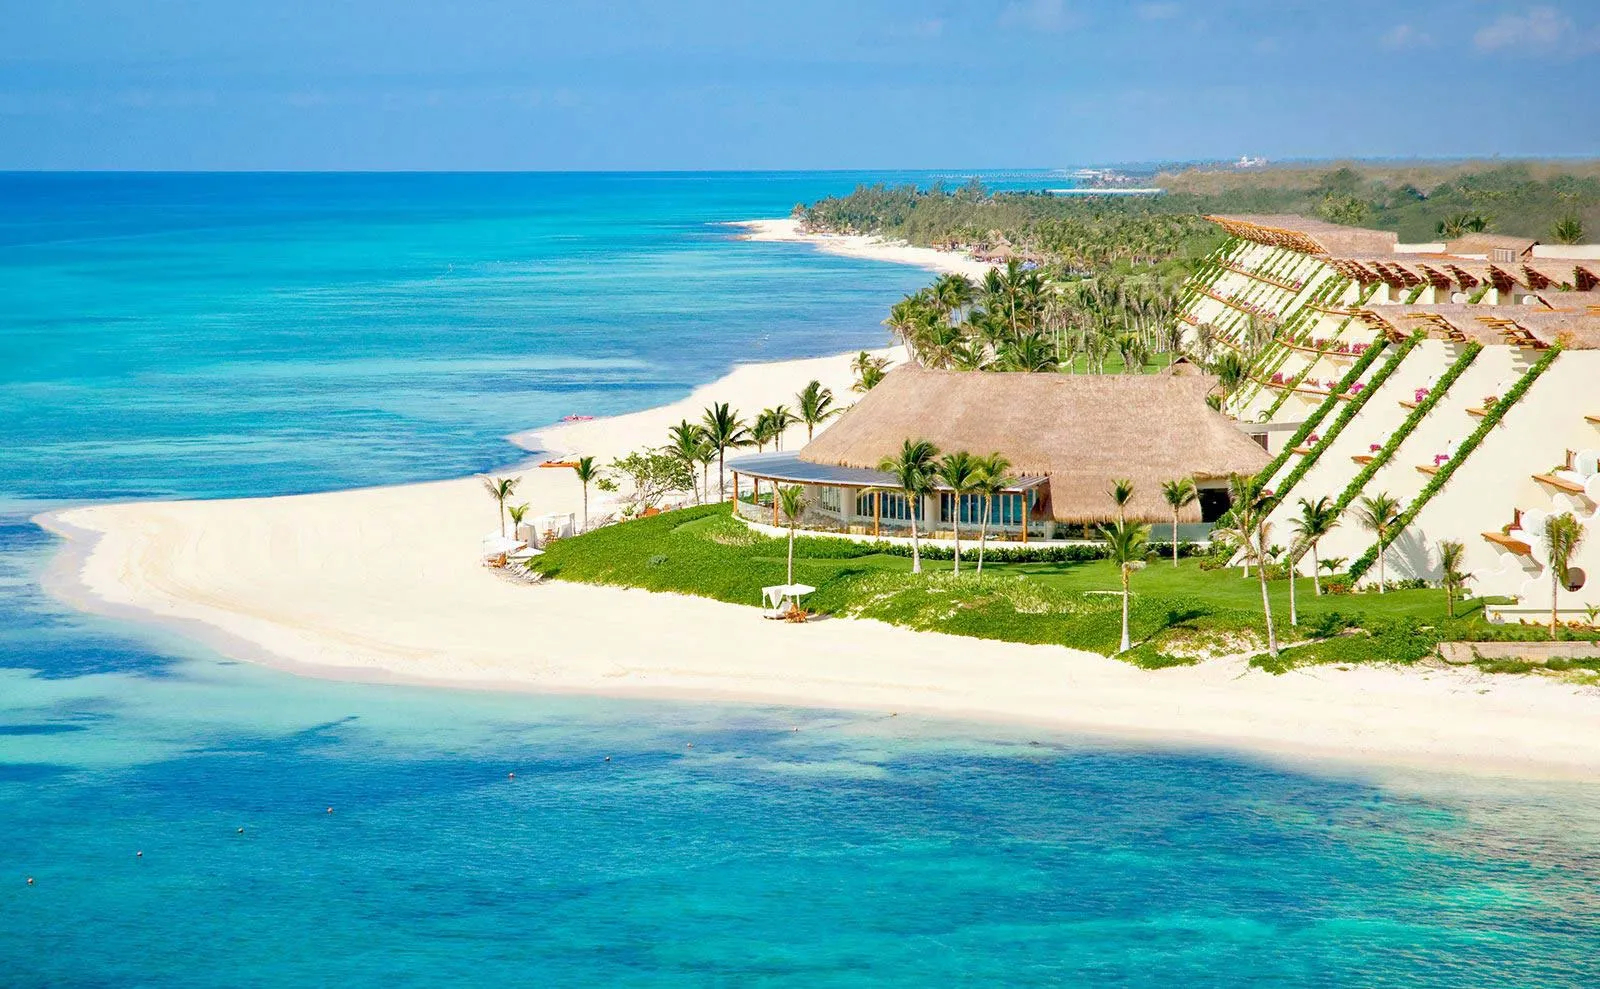 Nota sobre Visita estos estupendos lugares de Isla Mujeres, Quintana Roo